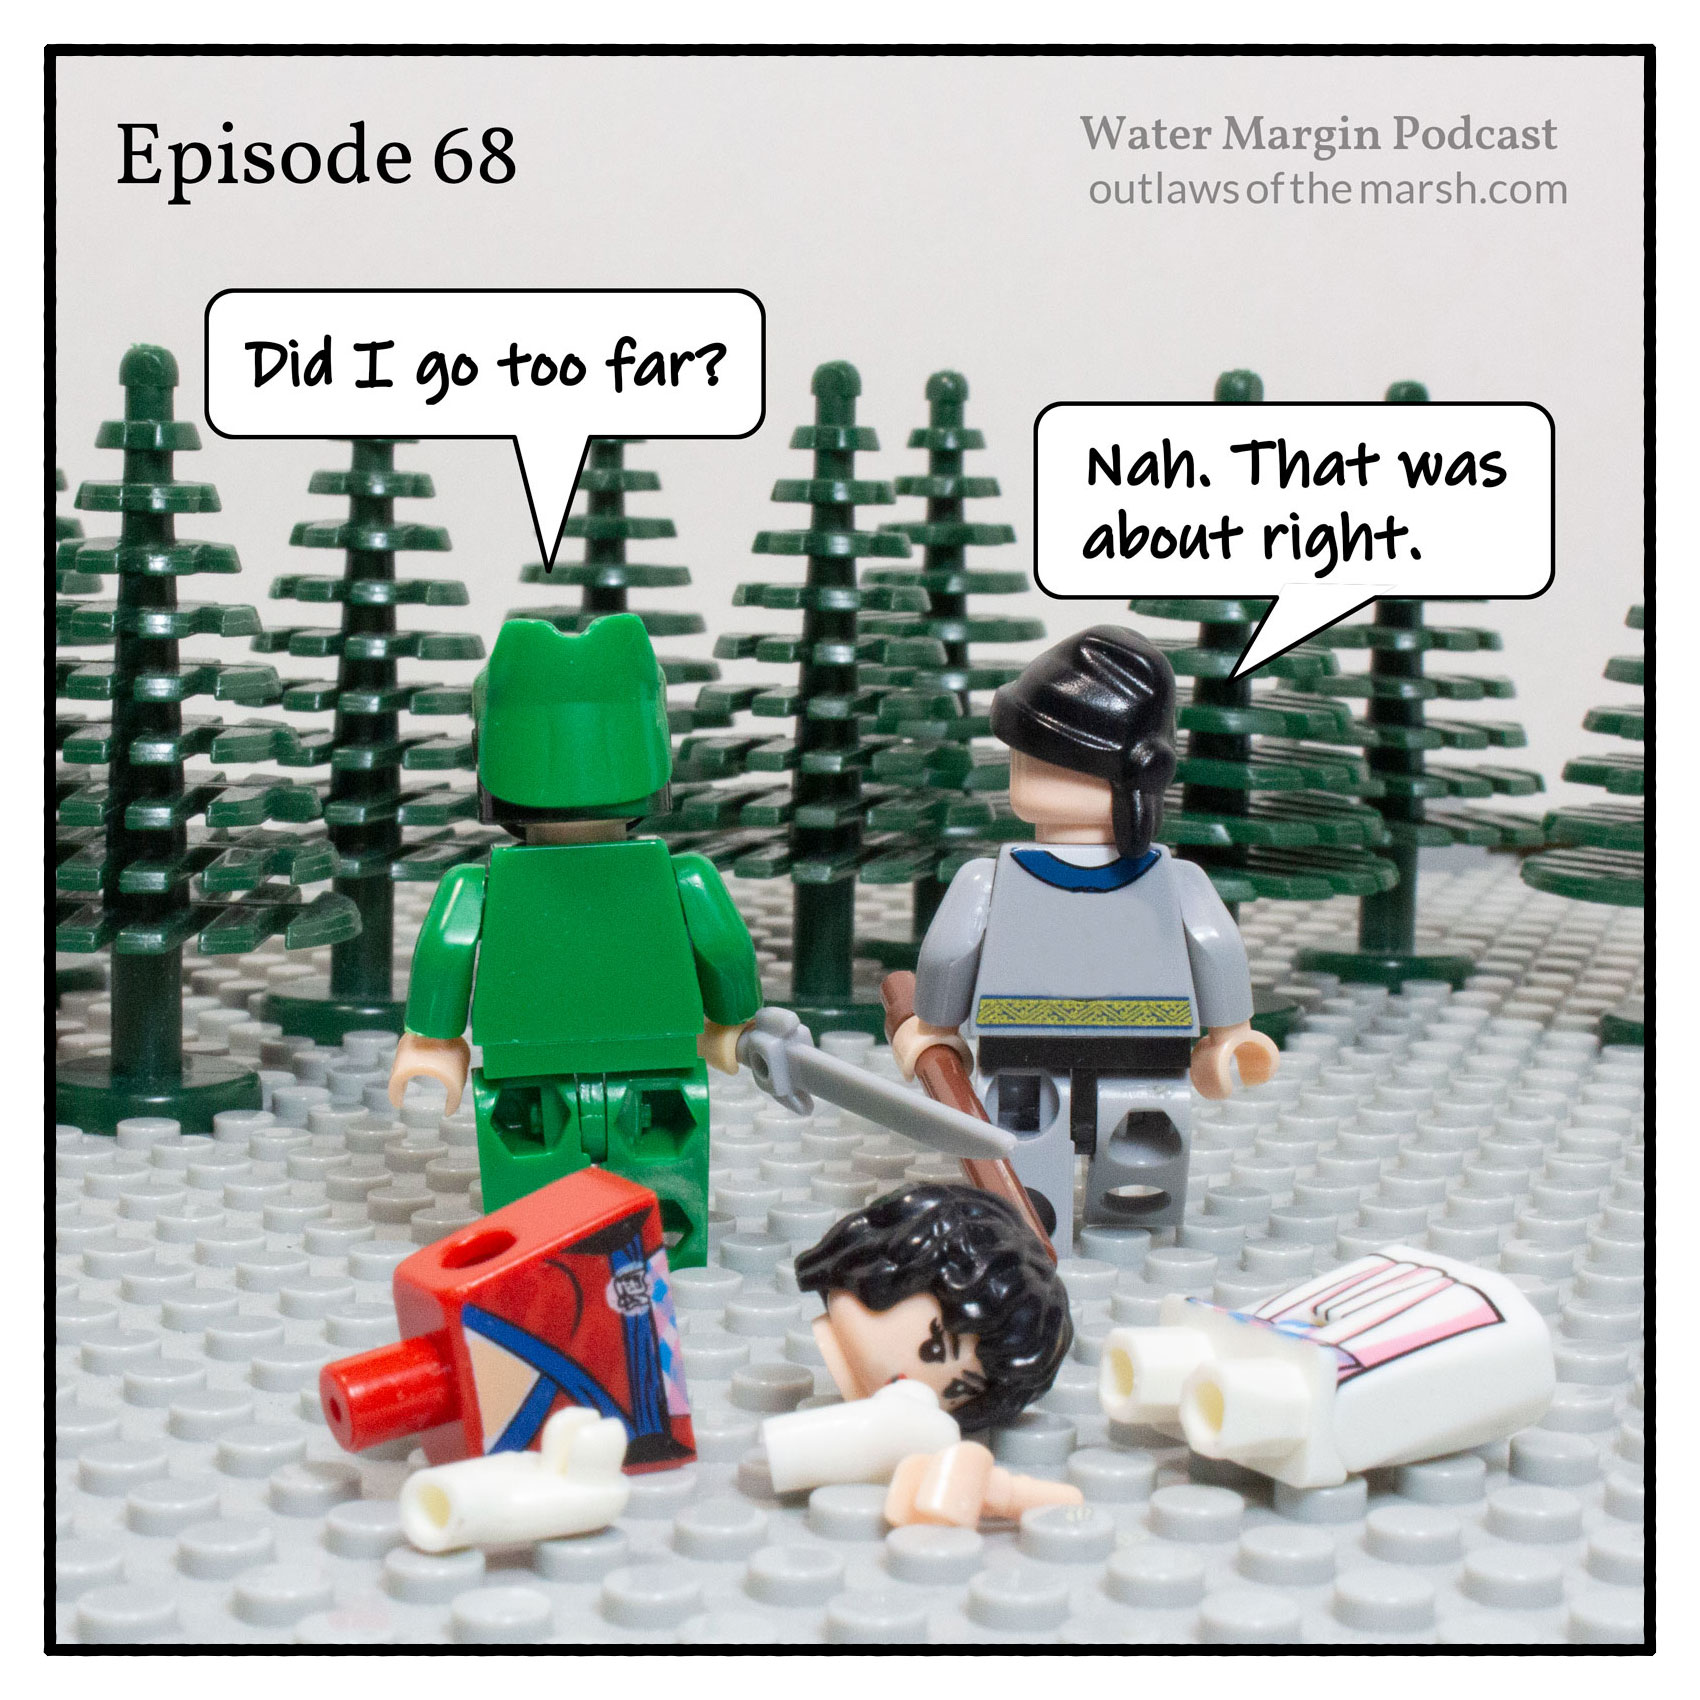 Water Margin Podcast: Episode 068